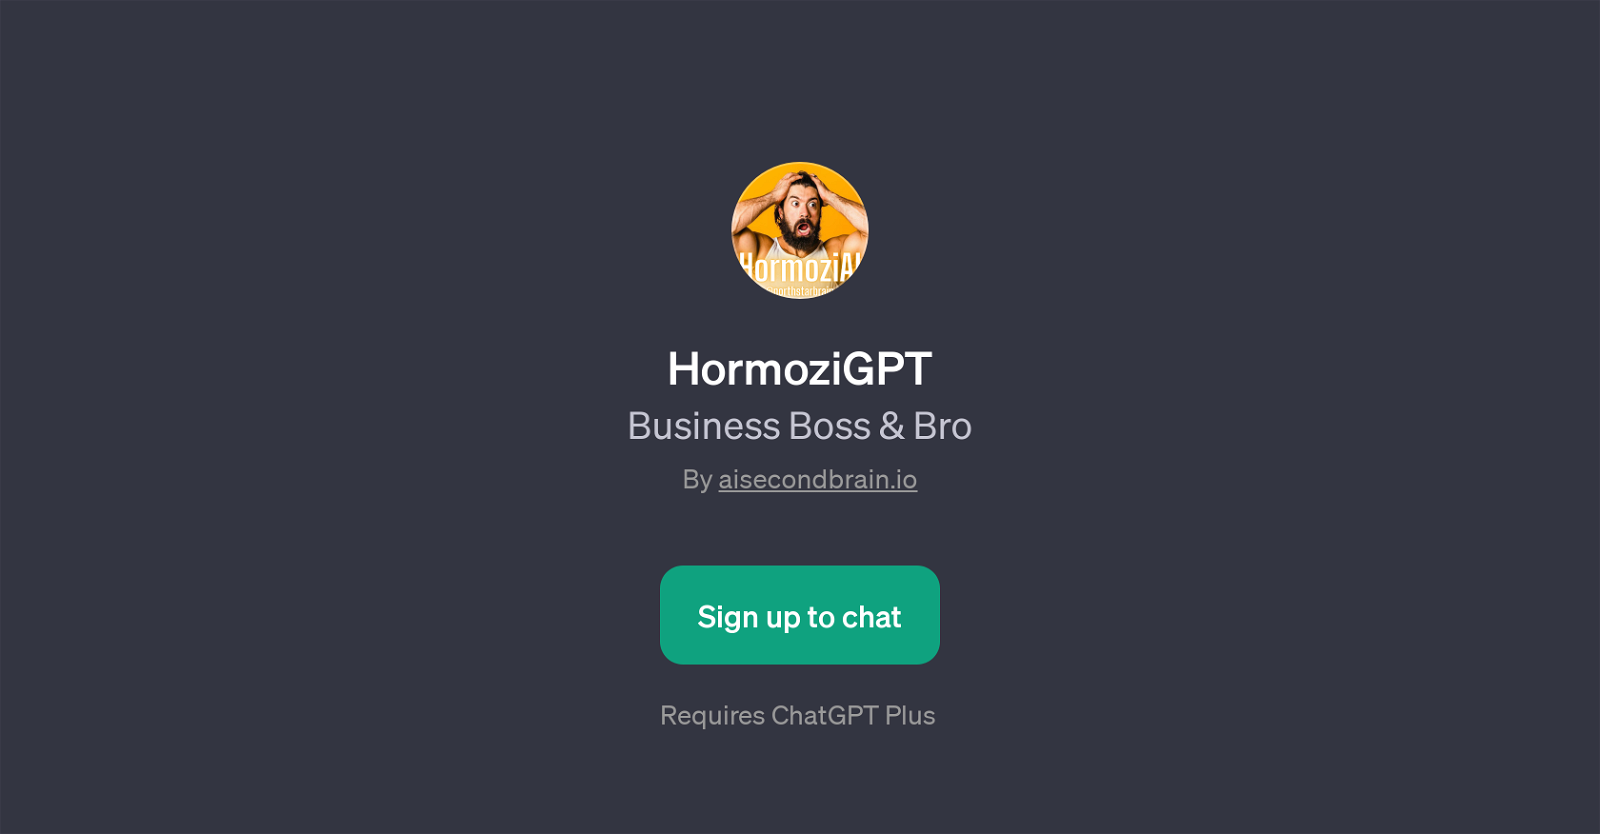 HormoziGPT website